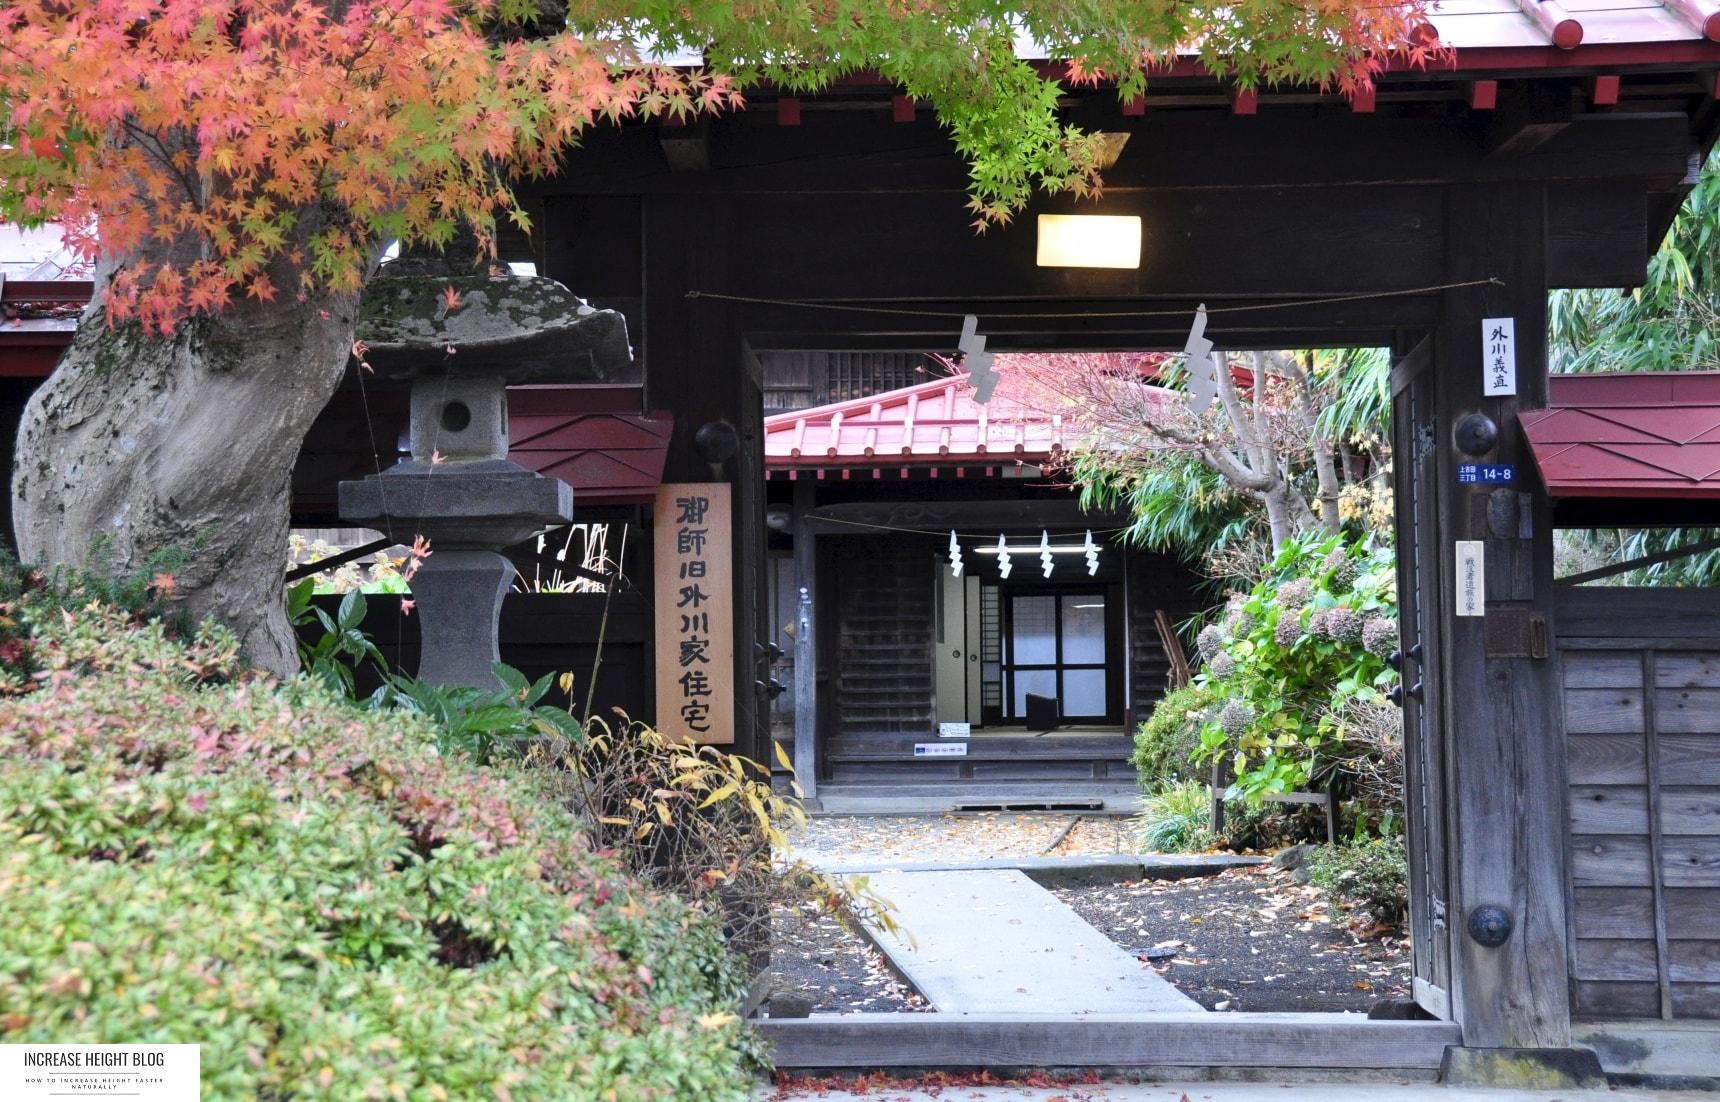 Togawa Oshi House: Lodging for Fuji Pilgrims